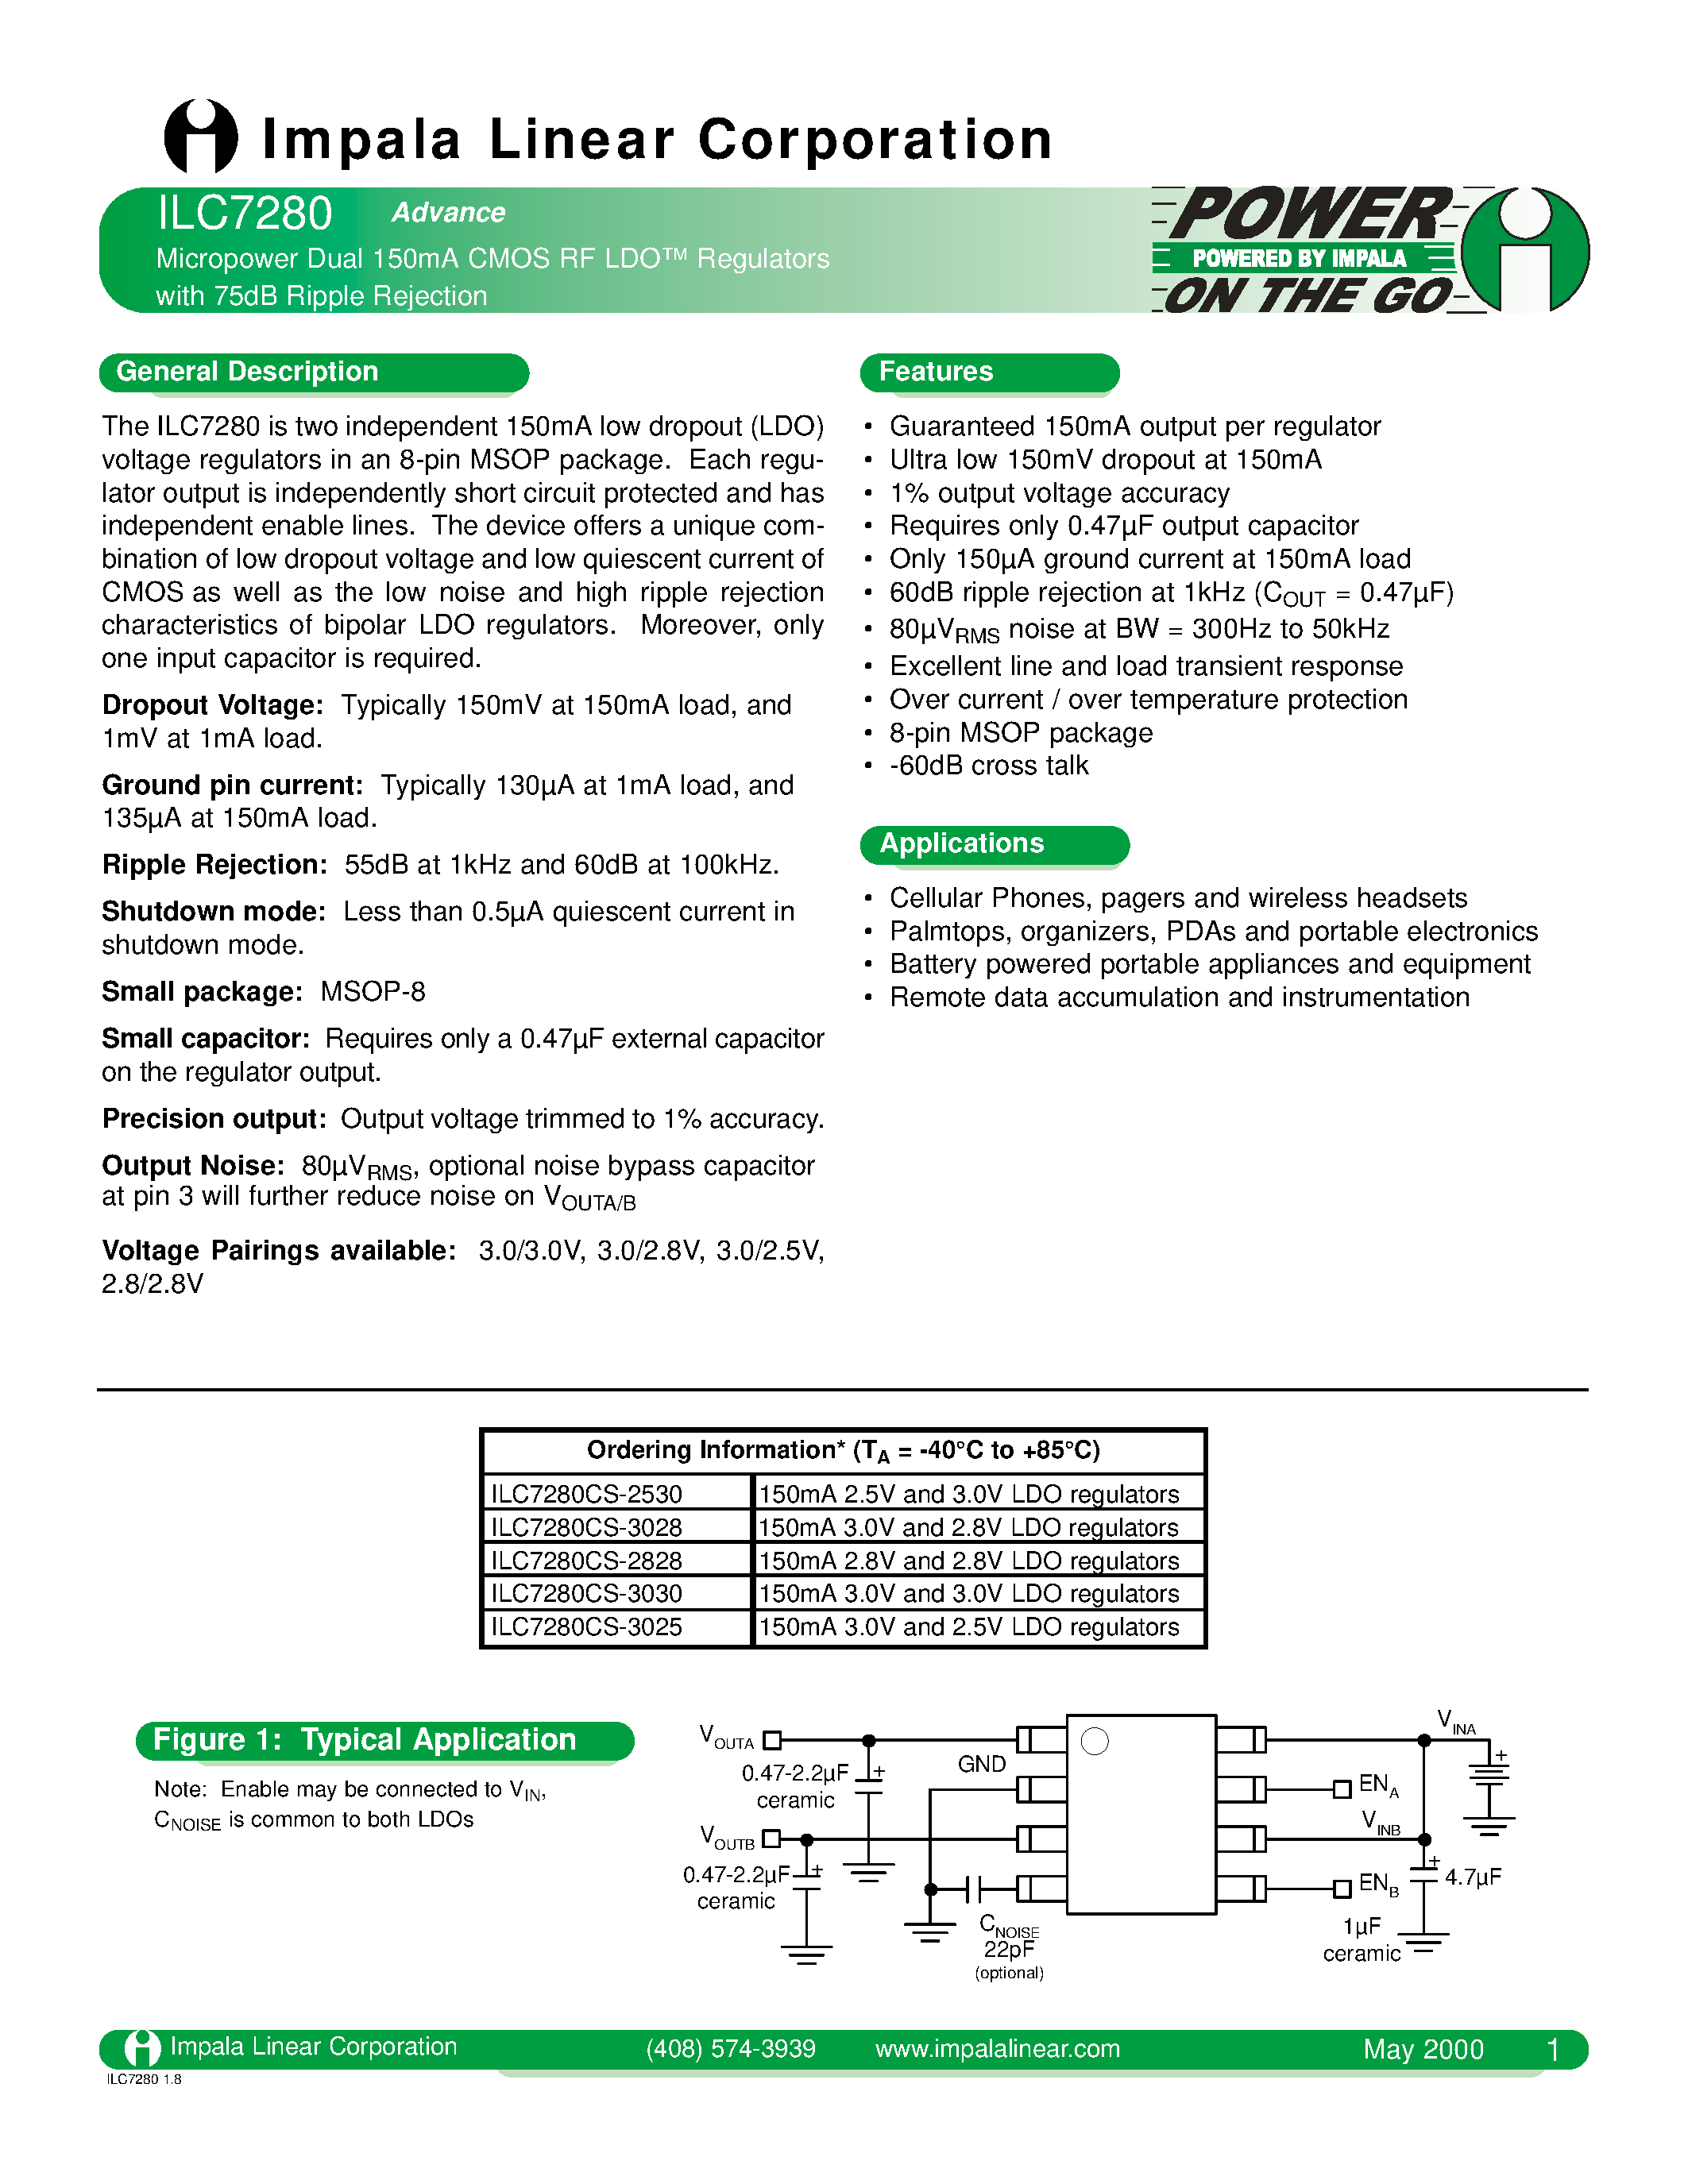 Даташит ILC7280 - MICROPOWER DUAL 150MA CMOS RF LDO REGULATORS WITH 75DB RIPPLE REJECTION страница 1